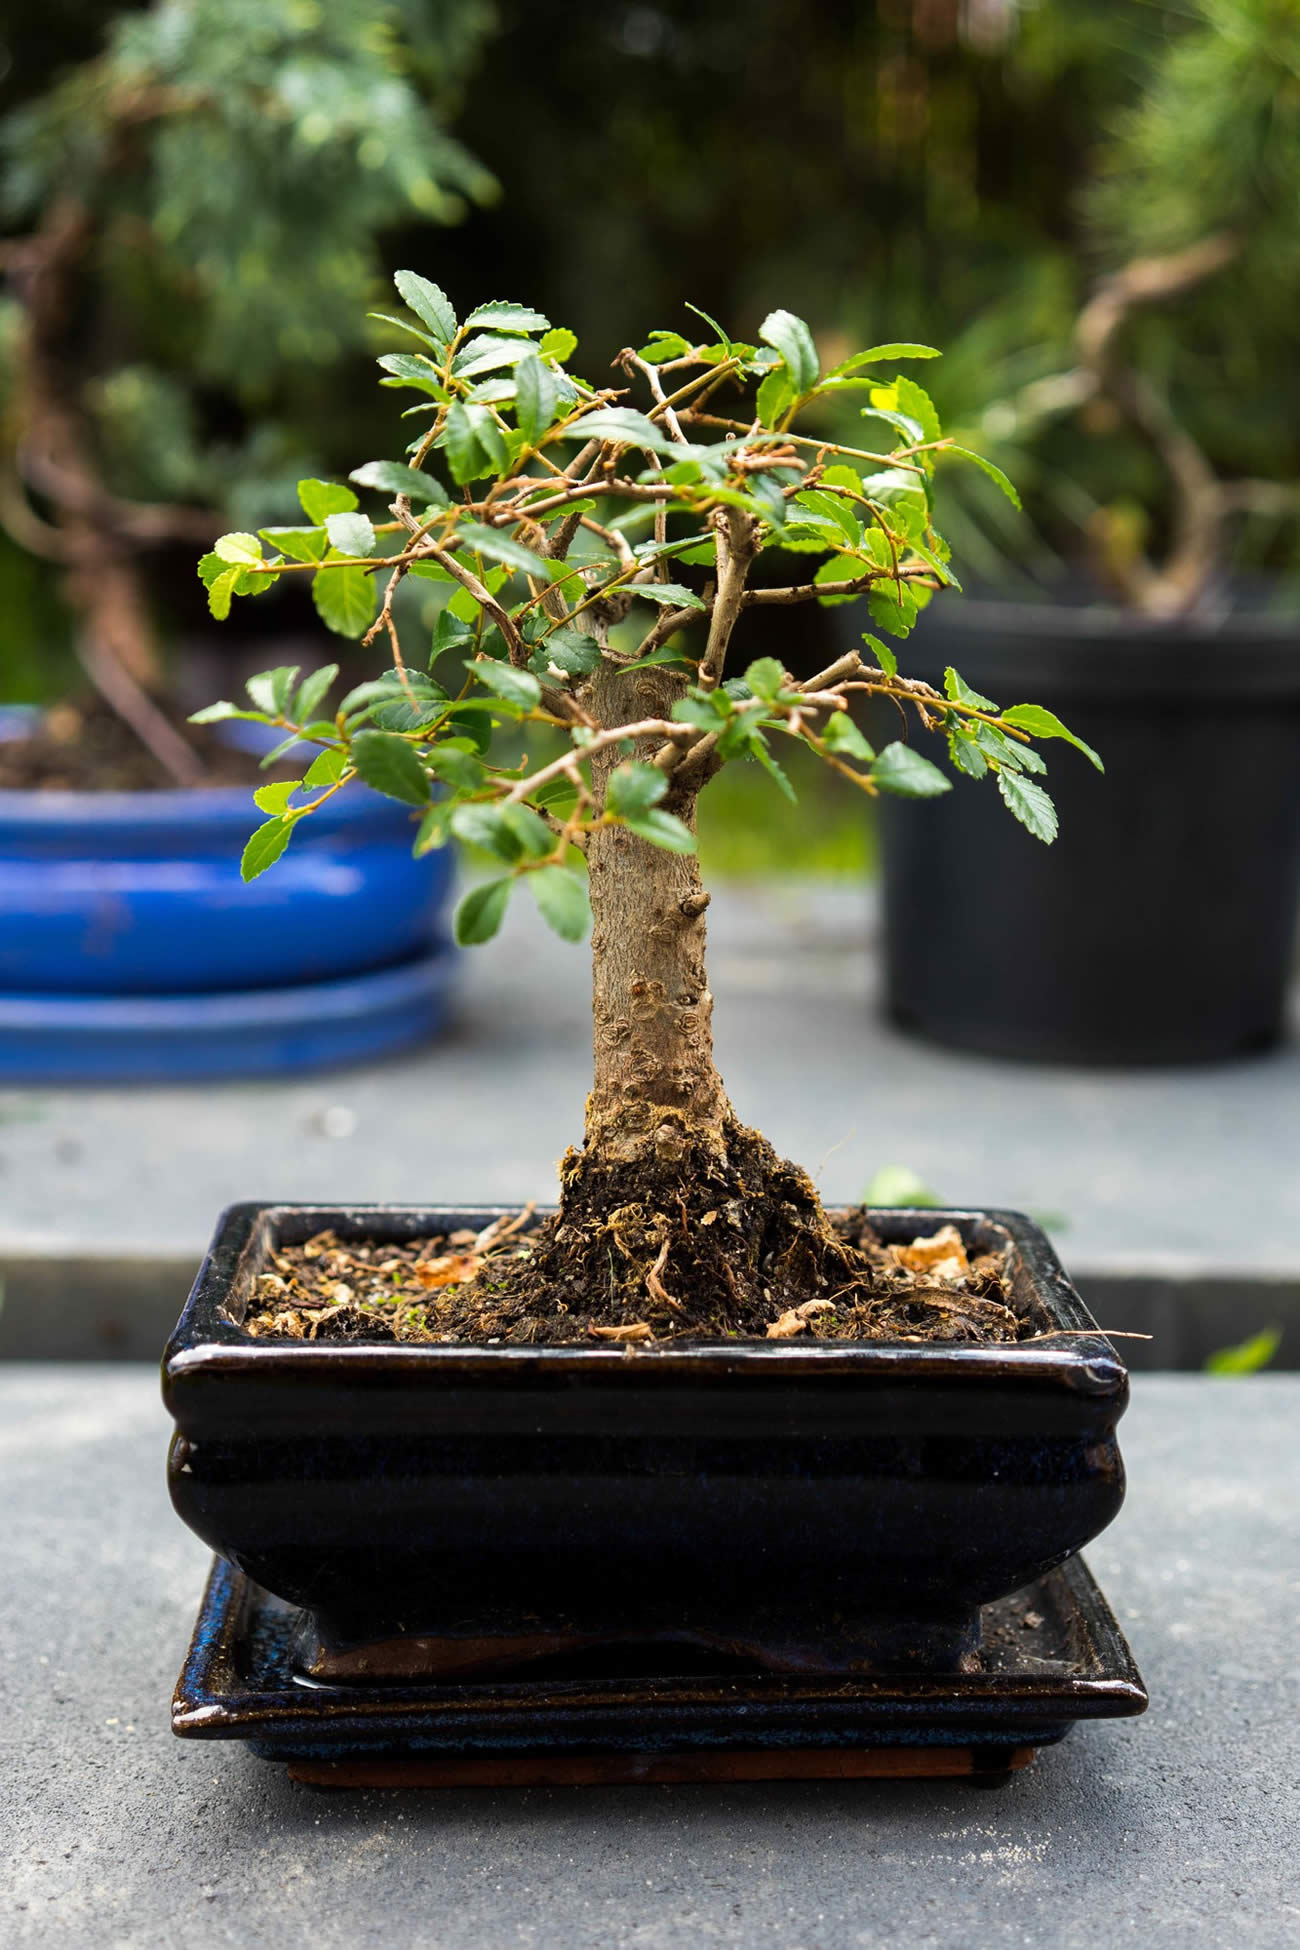 How Long Does A Bonsai Tree Take To Grow?